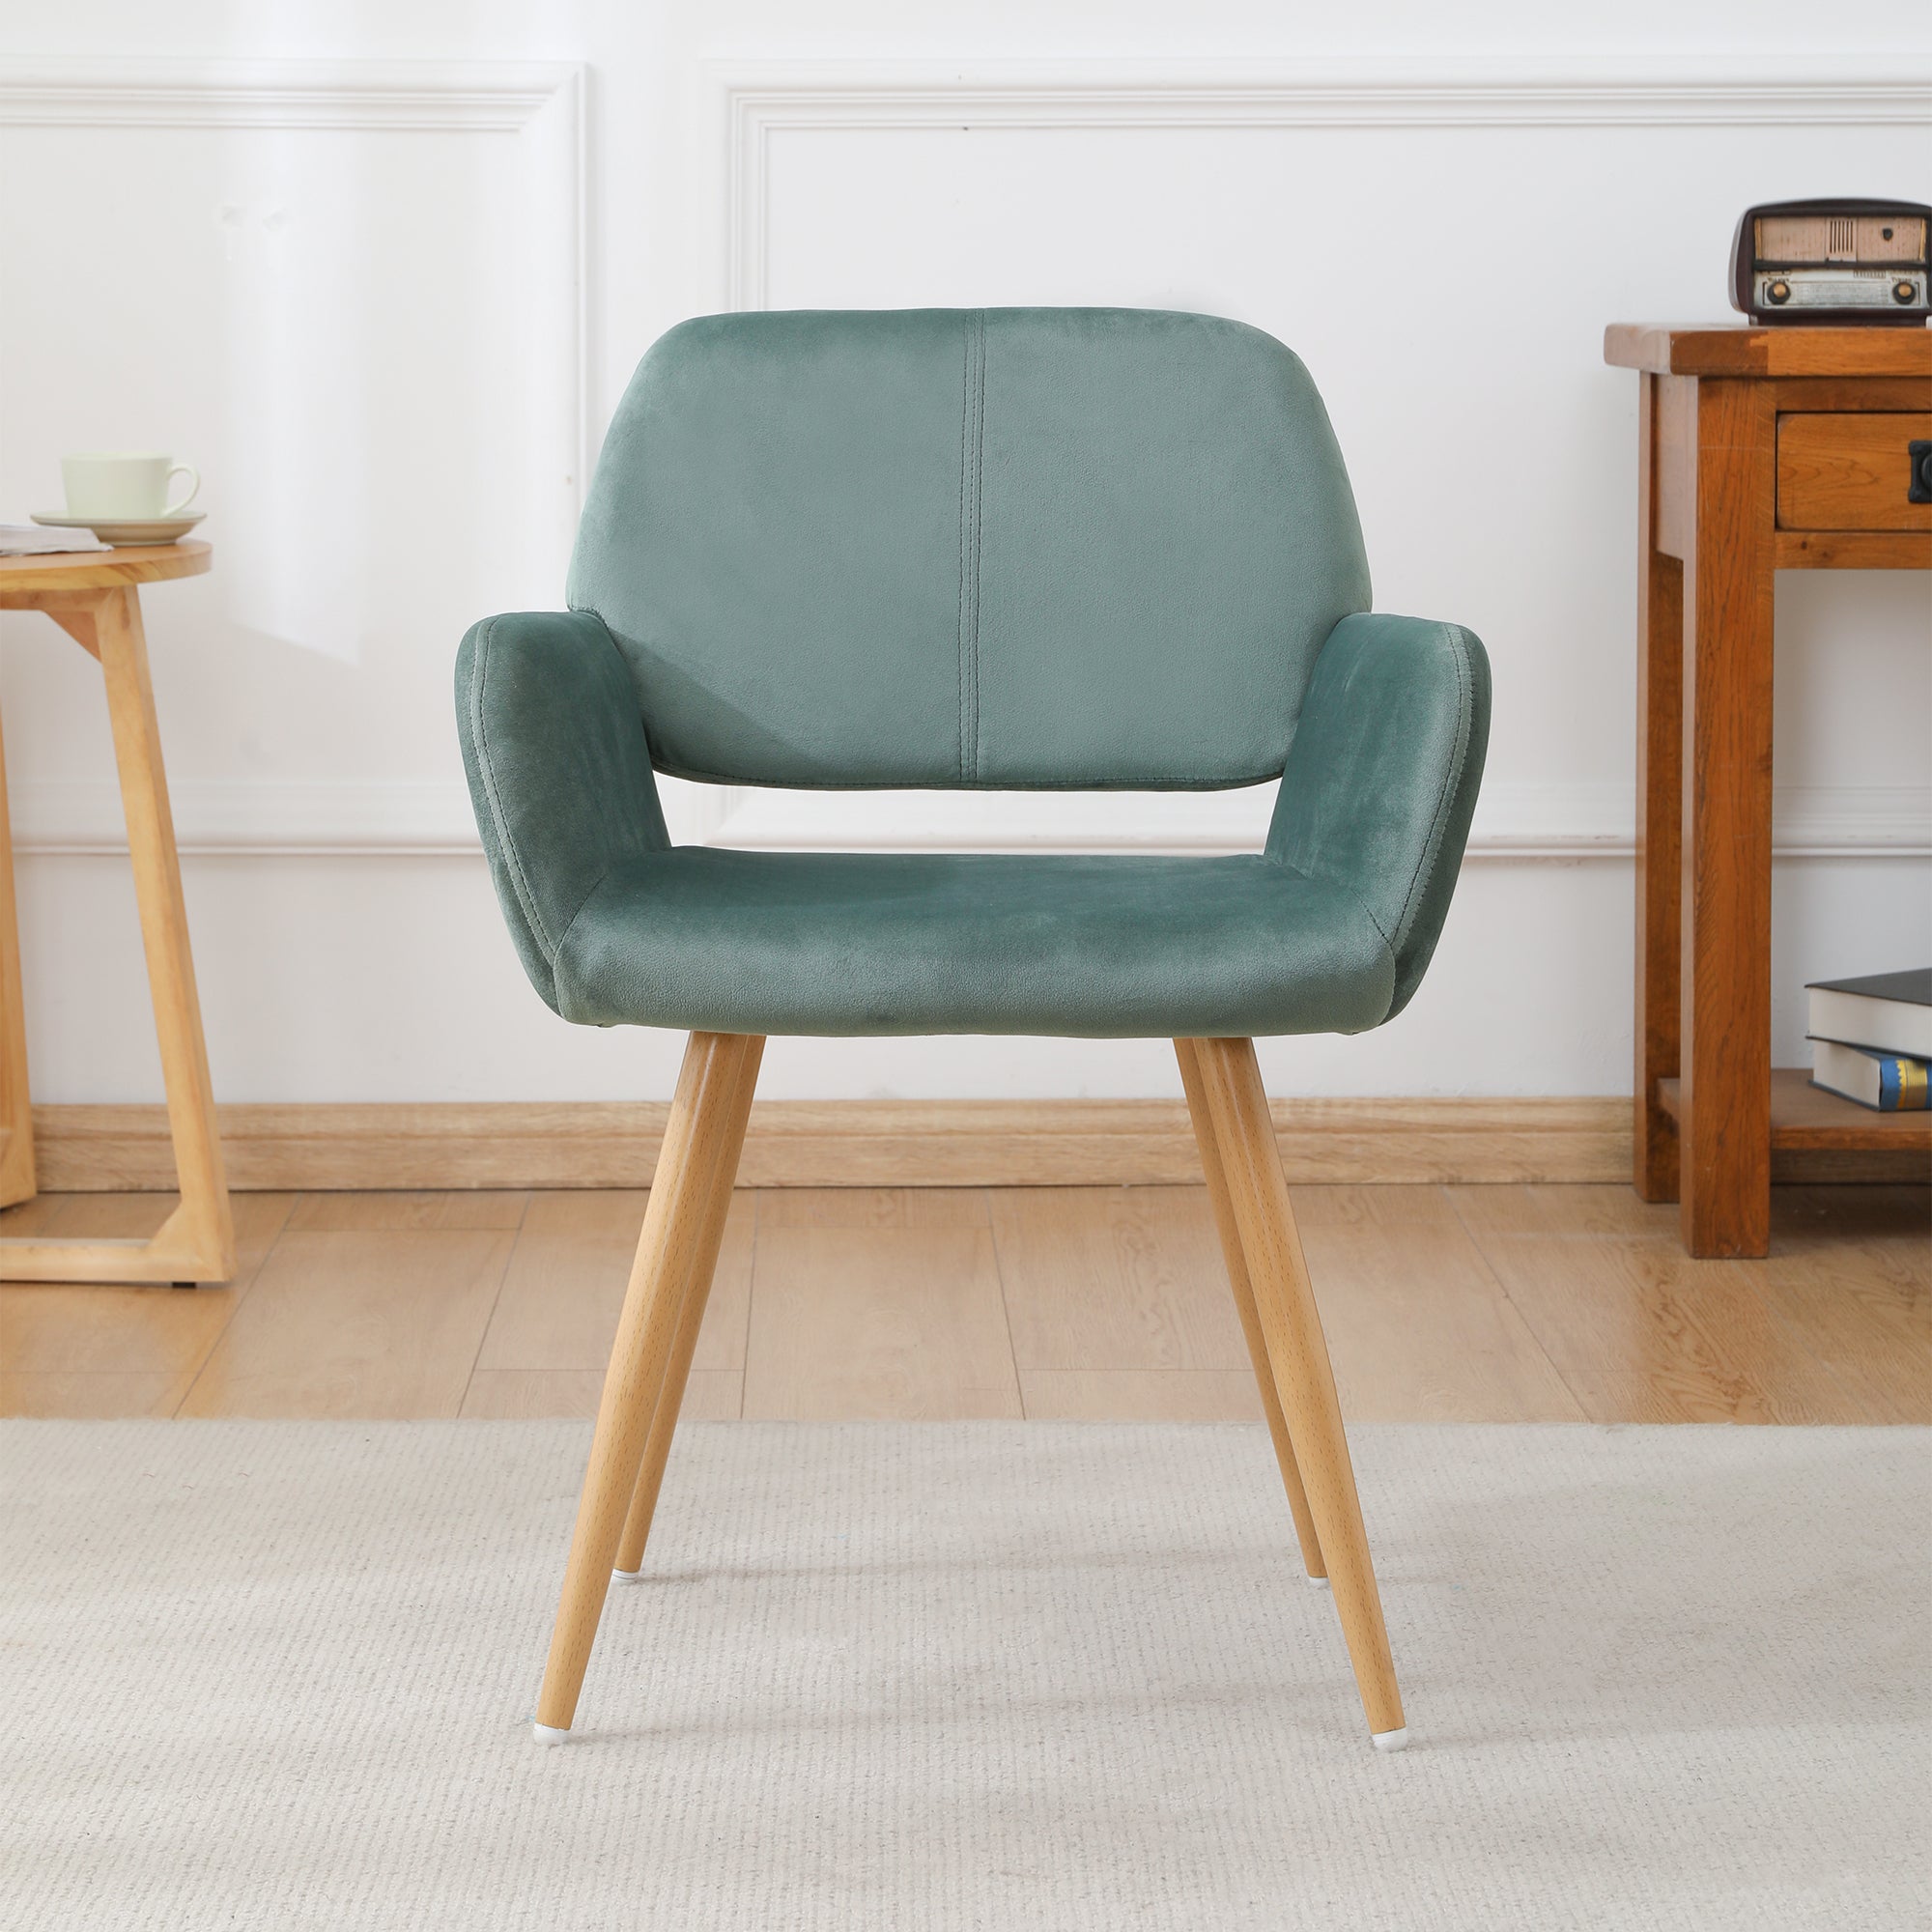 Velvet Dining Chair with Metal Leg - Green + Beech Wooden Printing Leg